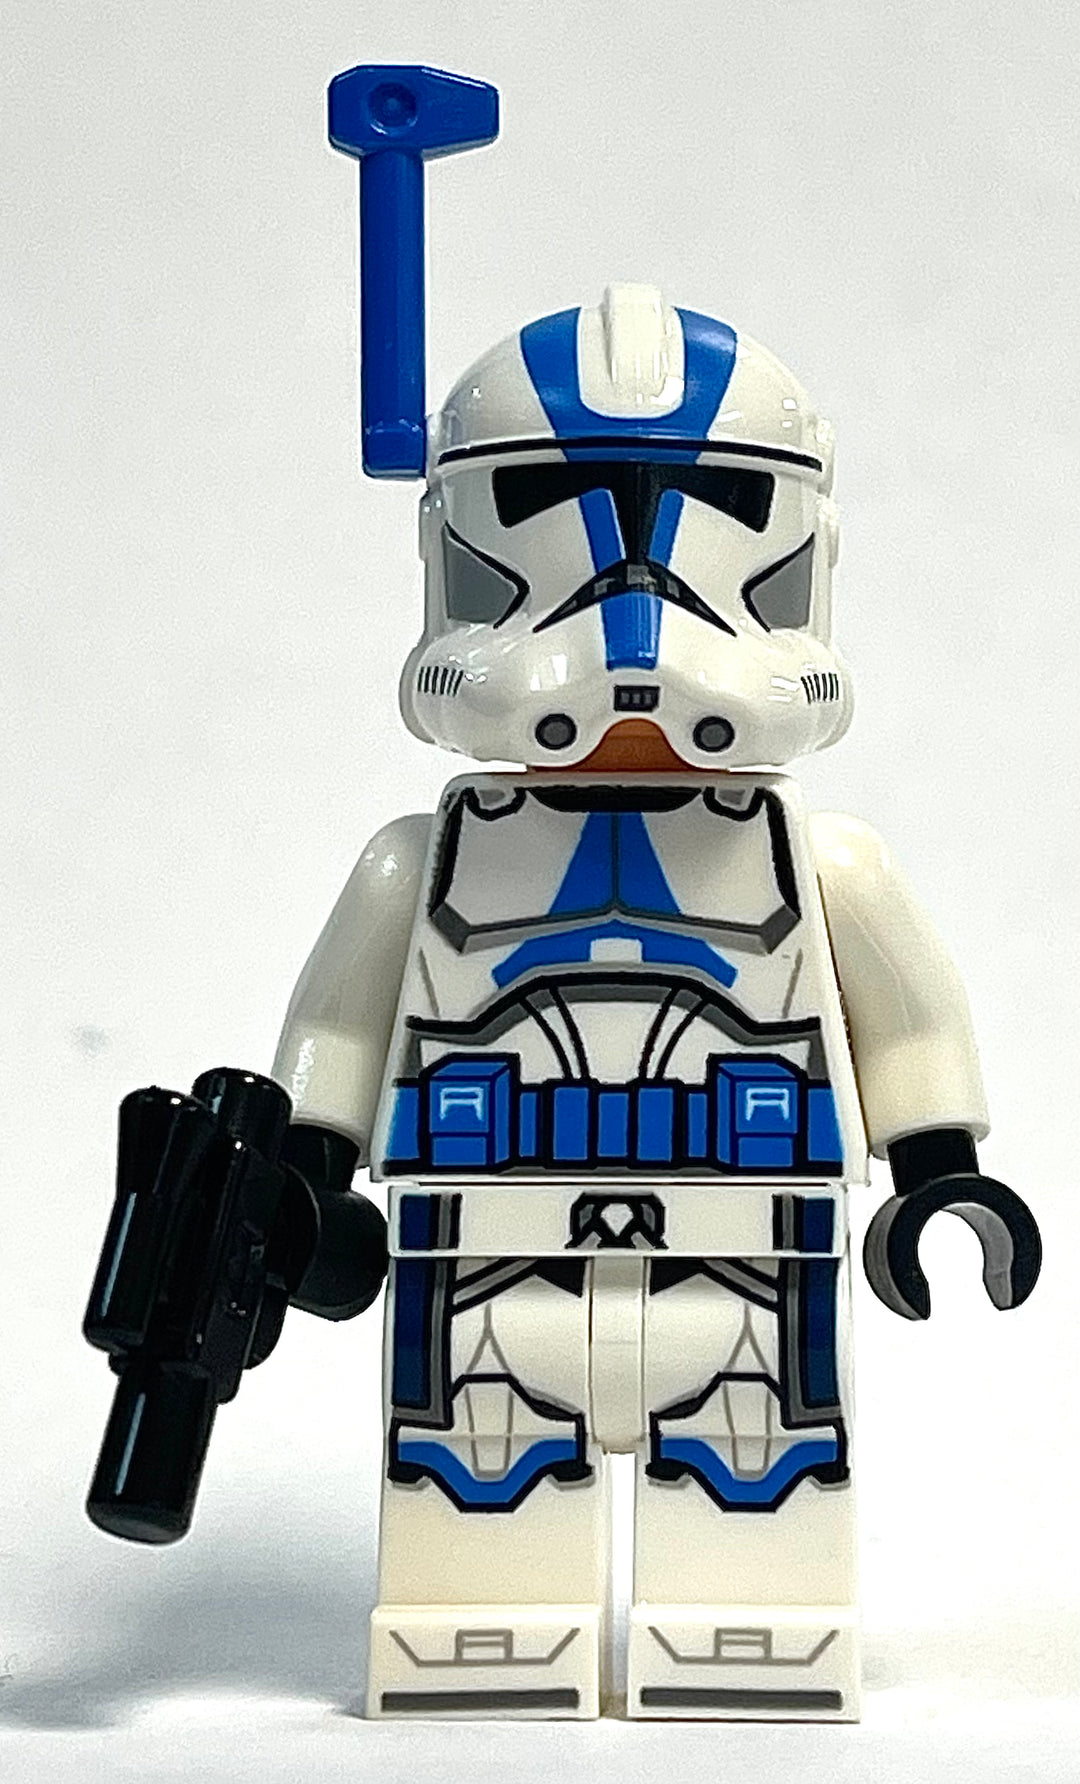 Lego® SW1094 mini figurine Star Wars, 501st Legion Clone Trooper